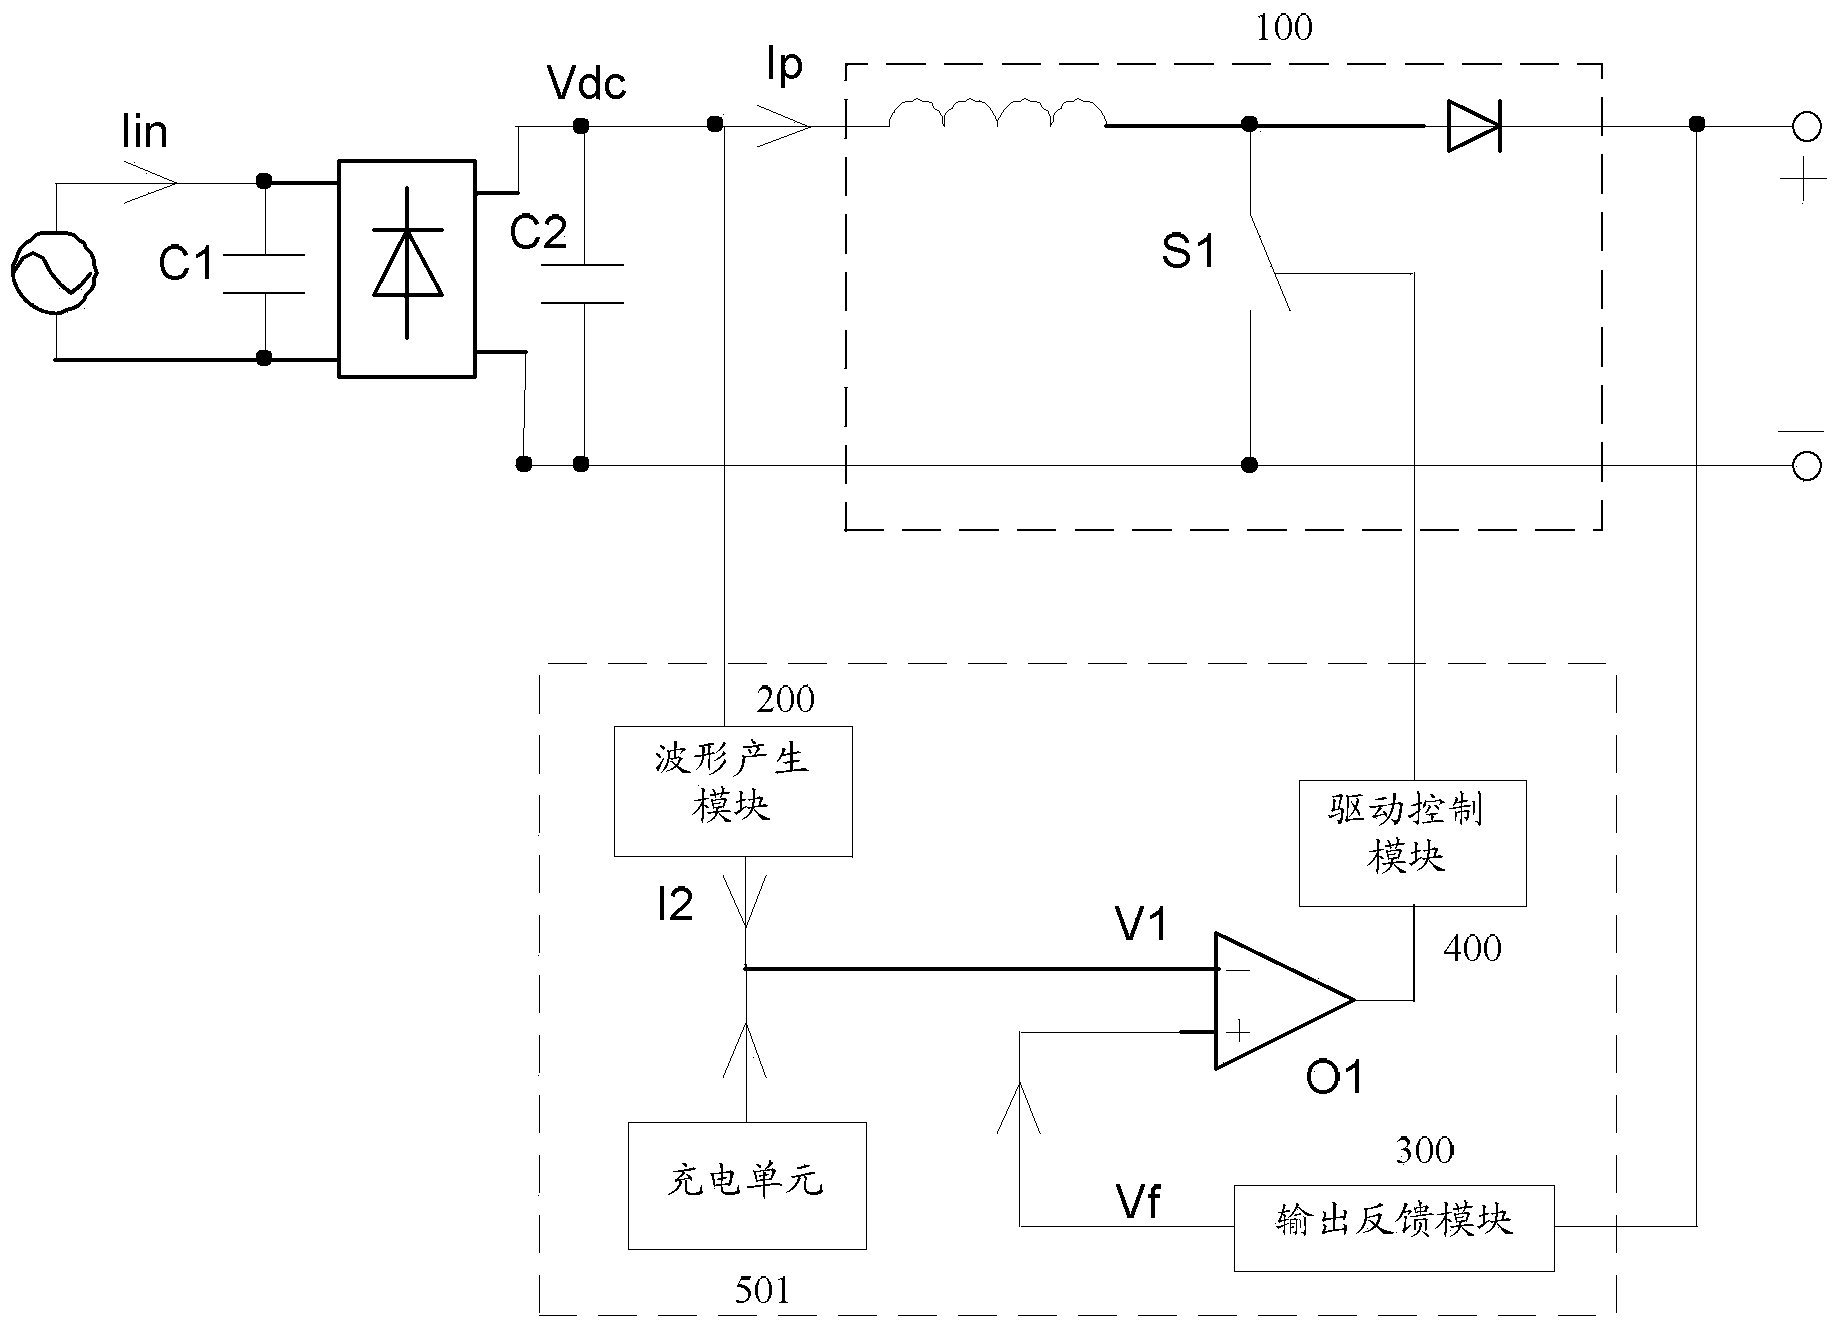 Control circuit in power factor correction circuit